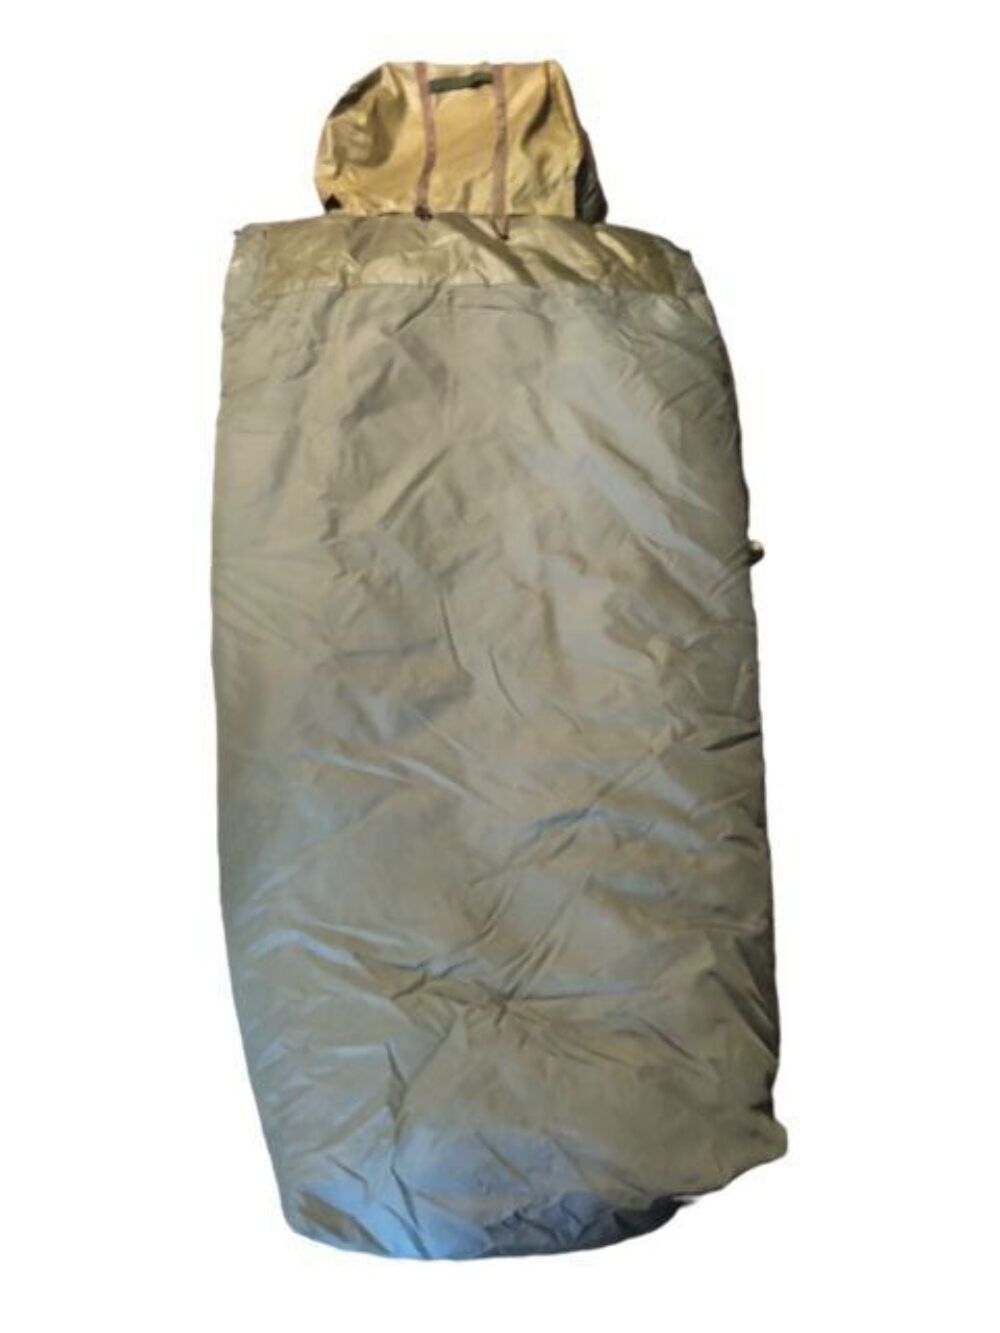 British Army cqc 58 pattern down filled sleeping bag 1965